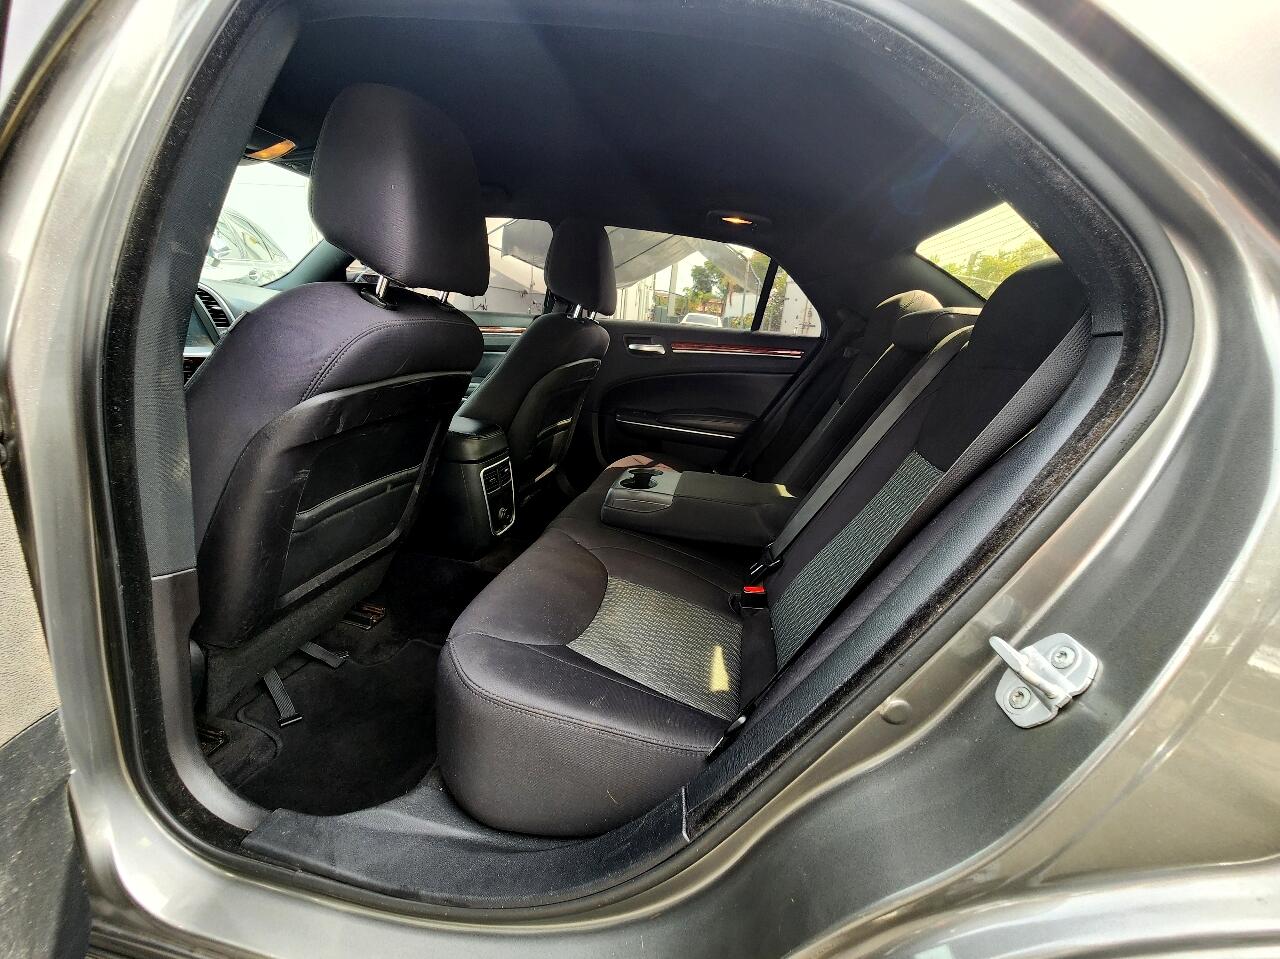 2012 CHRYSLER 300 Sedan - $5,999